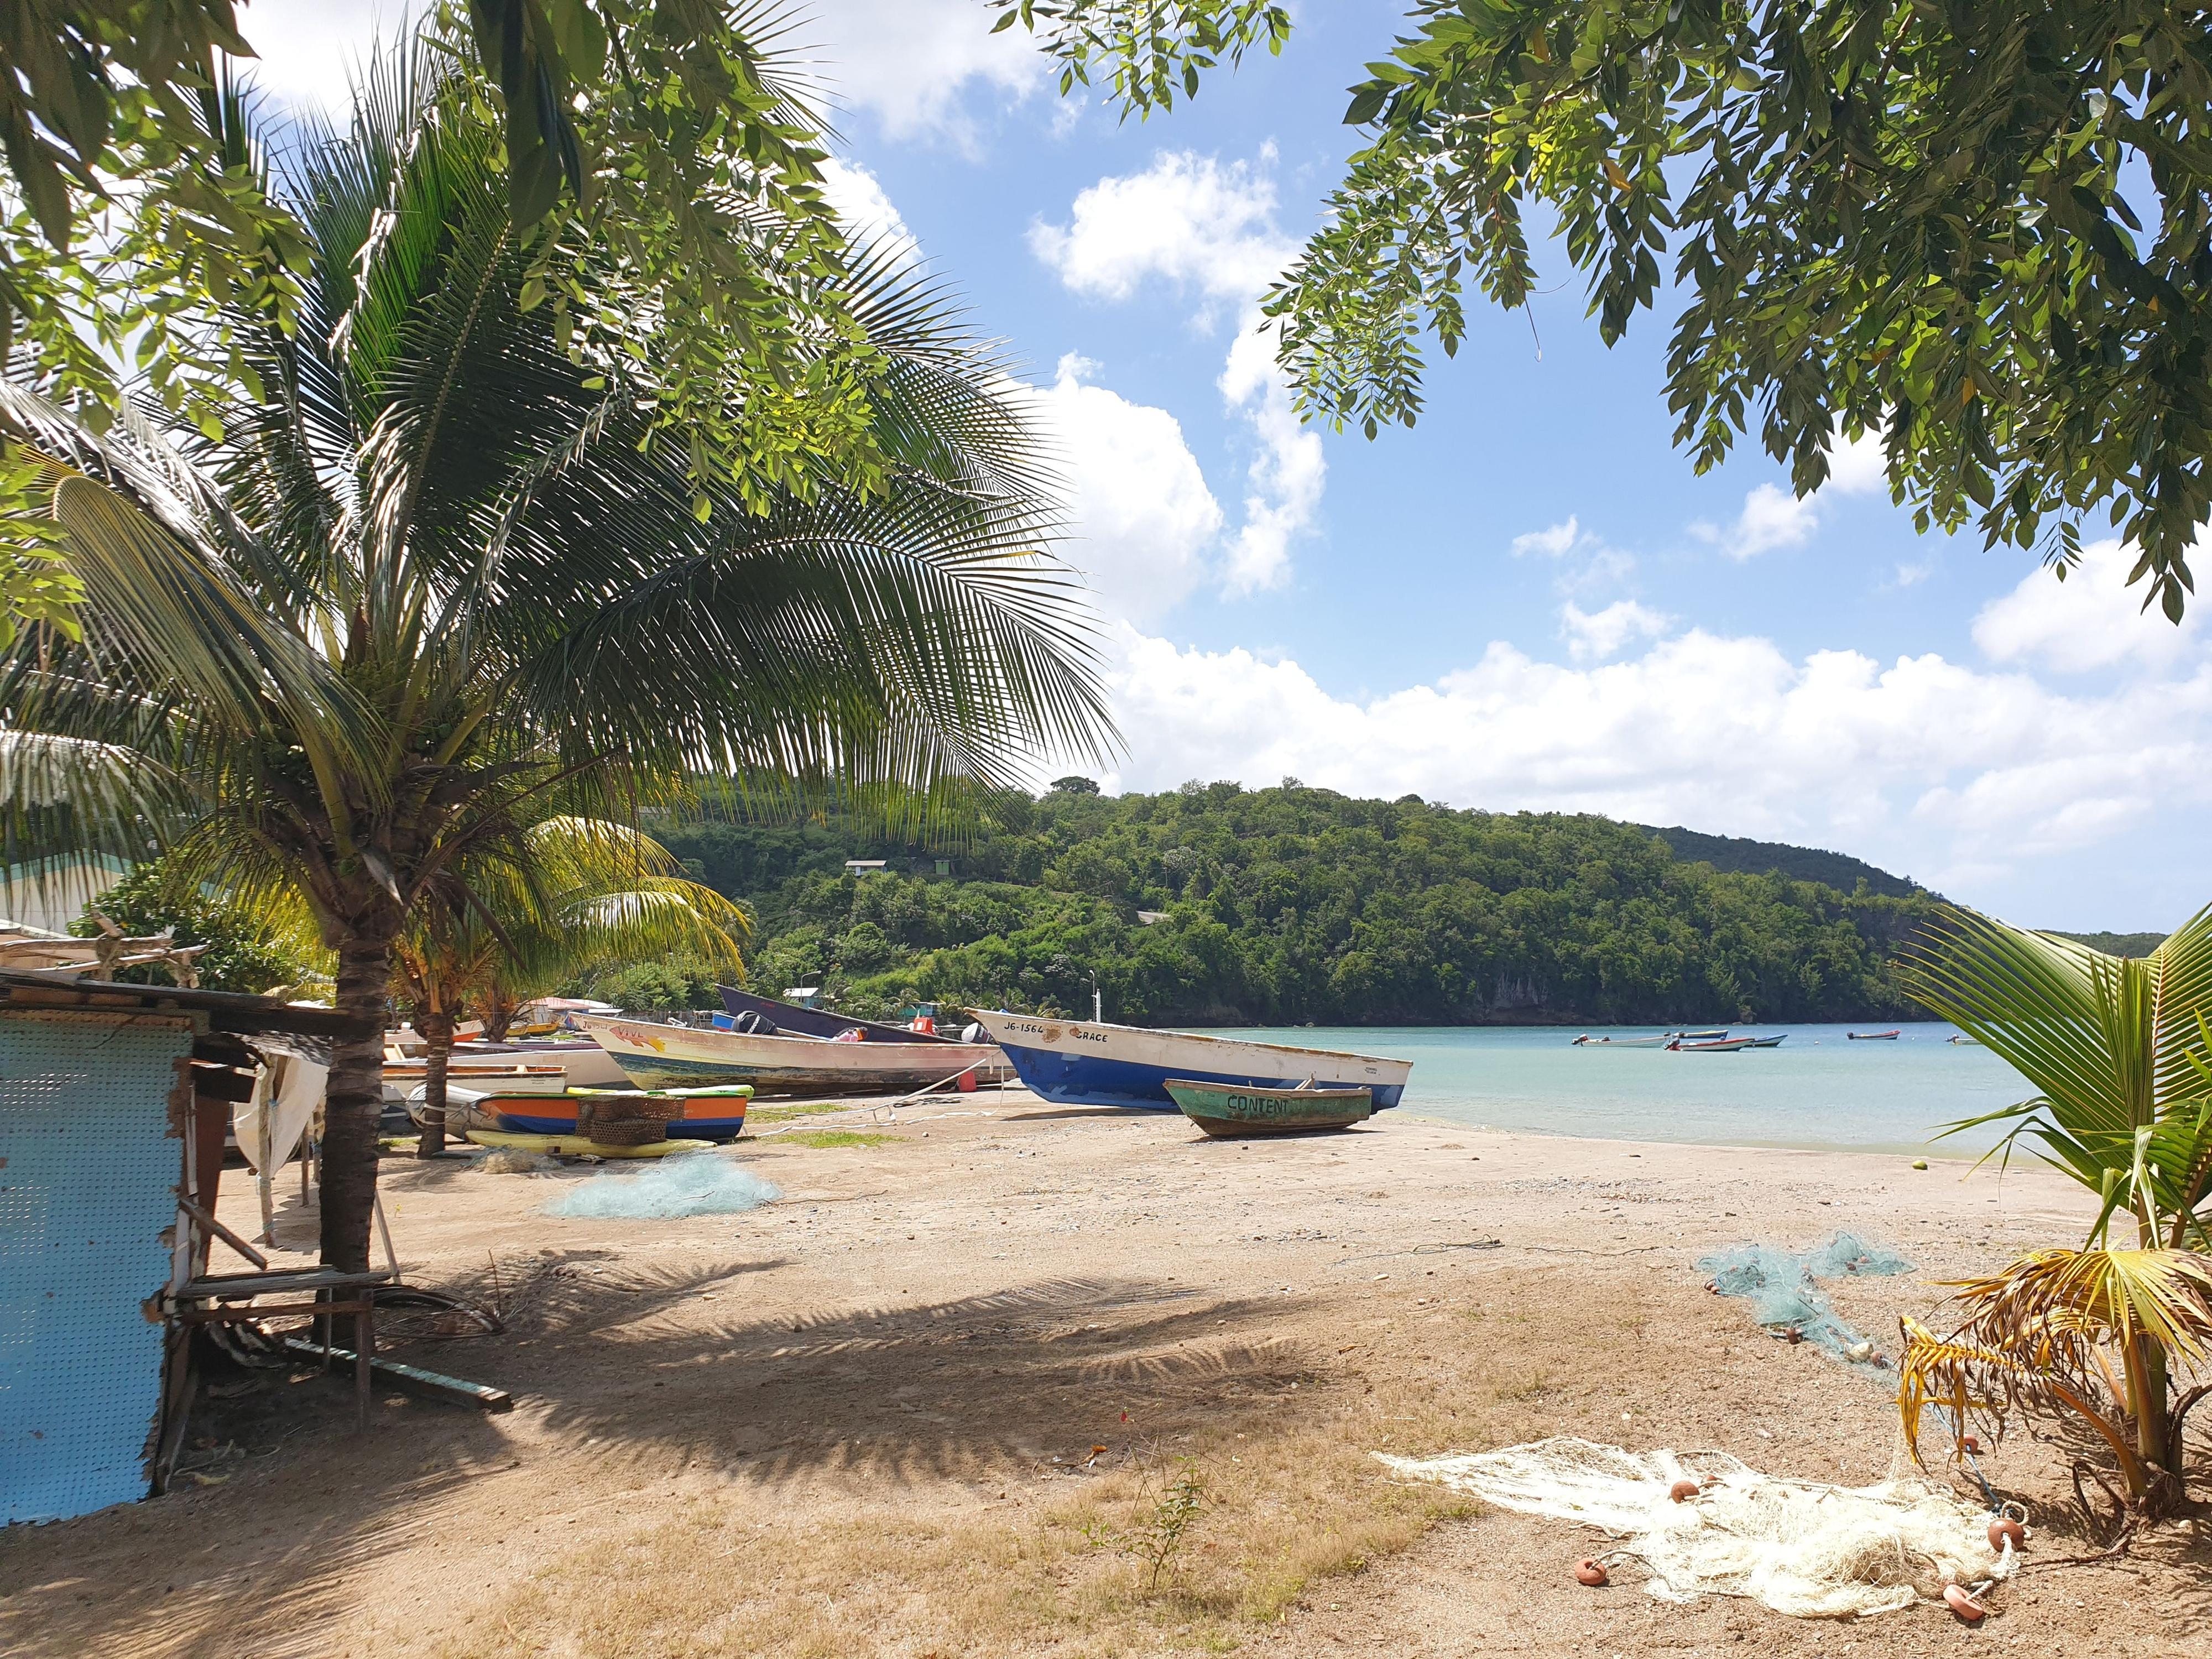 Beach with boat in Anse-la-Raye, St Lucia, Caribbean